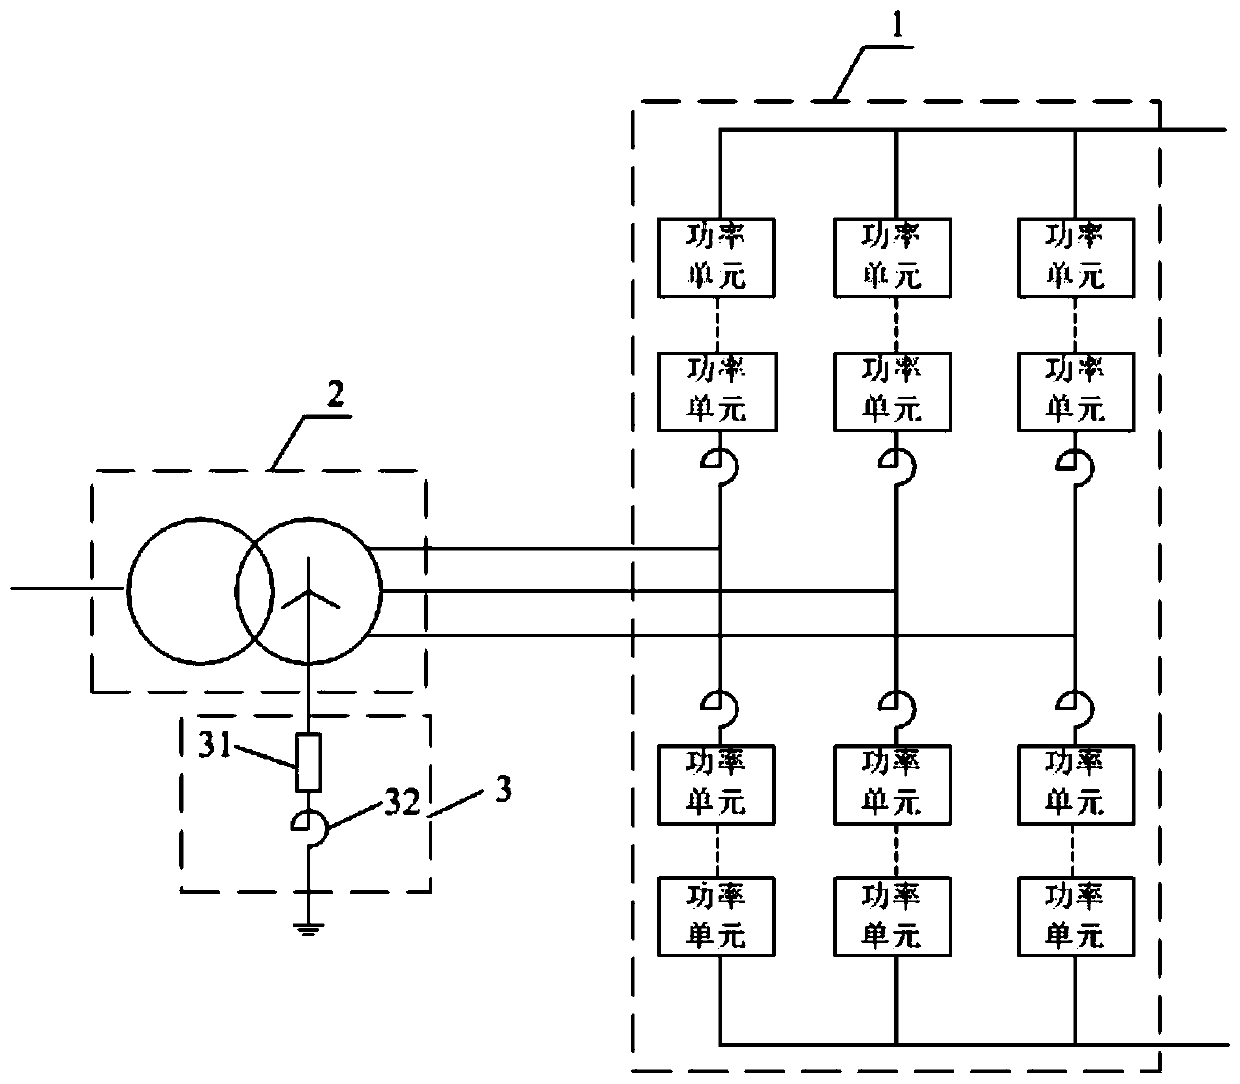 Symmetrical monopole type flexible direct-current converter station